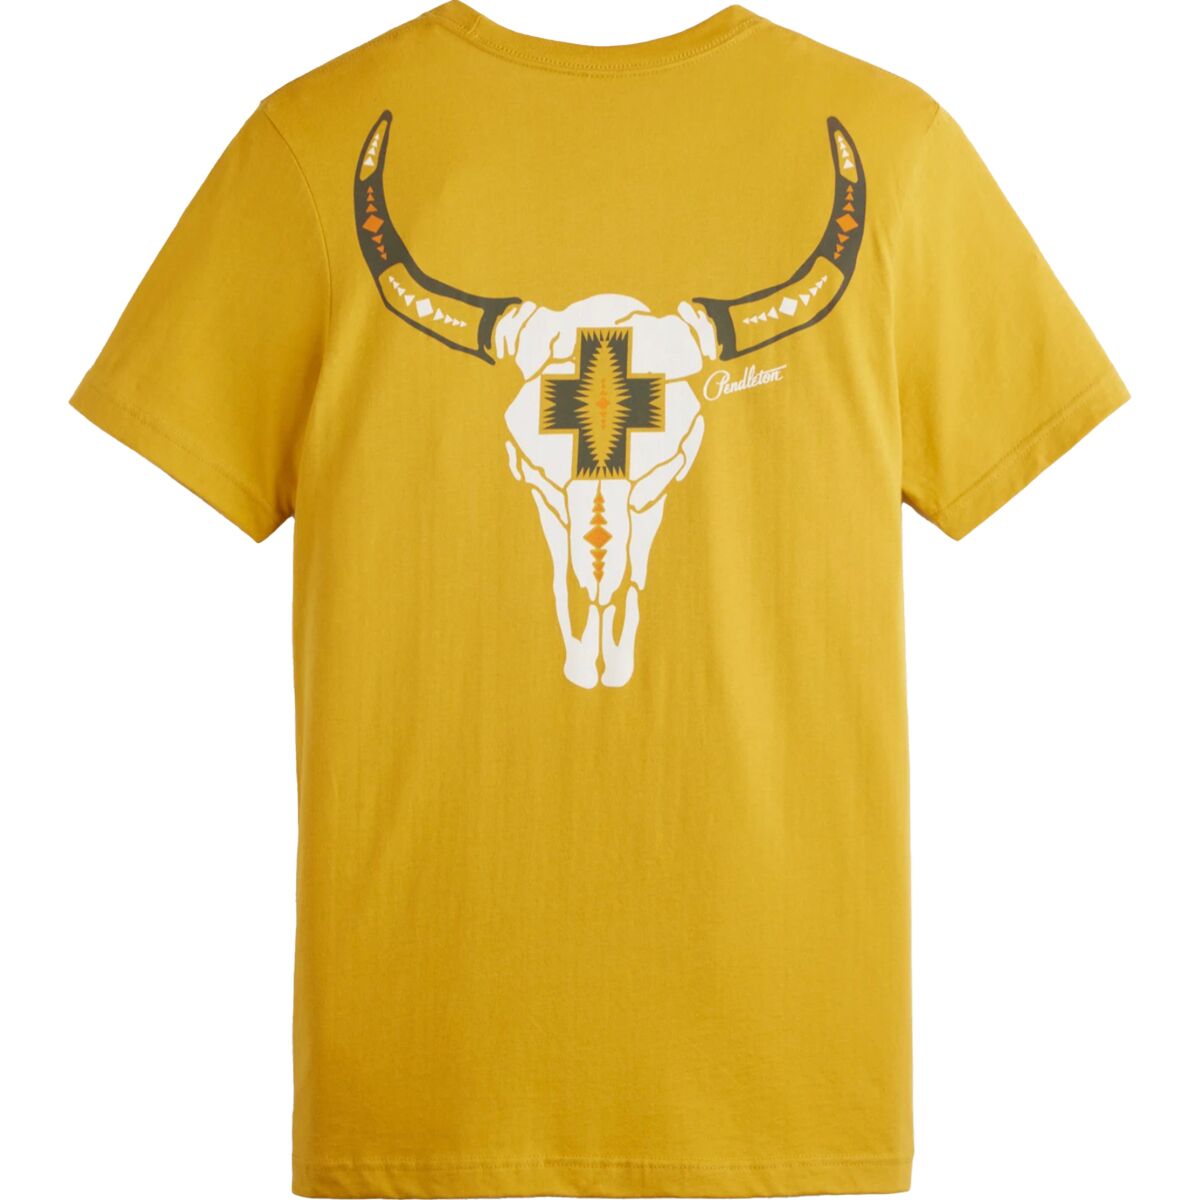 Harding Skull Graphic T-Shirt - Men